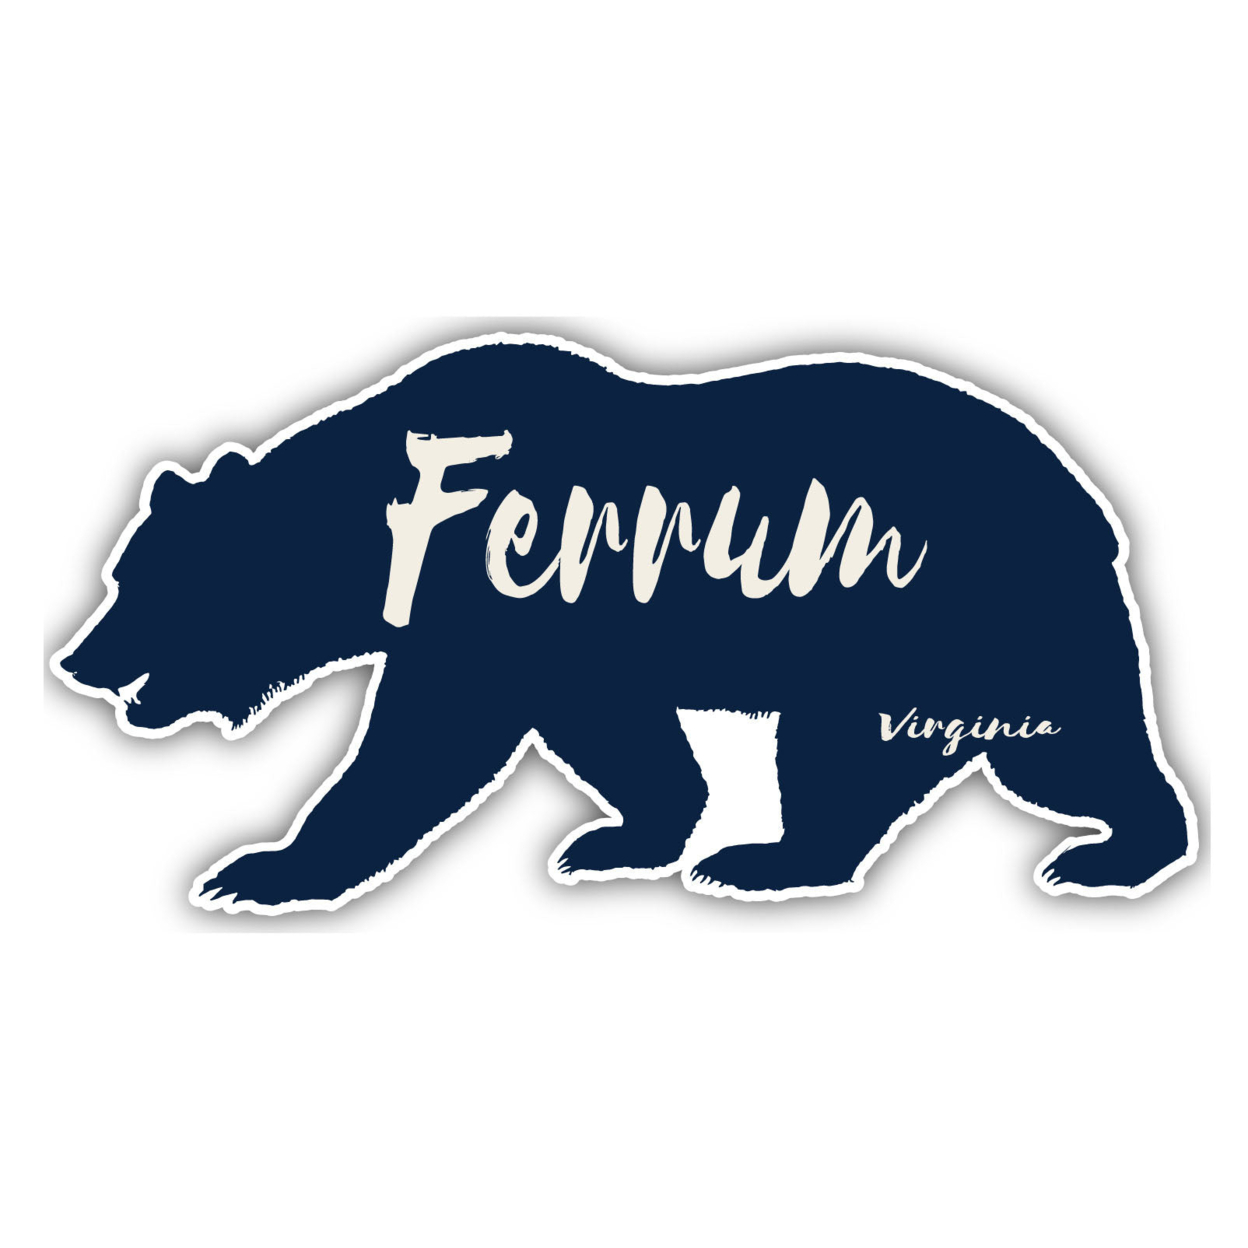 Ferrum Virginia Souvenir Decorative Stickers (Choose Theme And Size) - Single Unit, 8-Inch, Bear